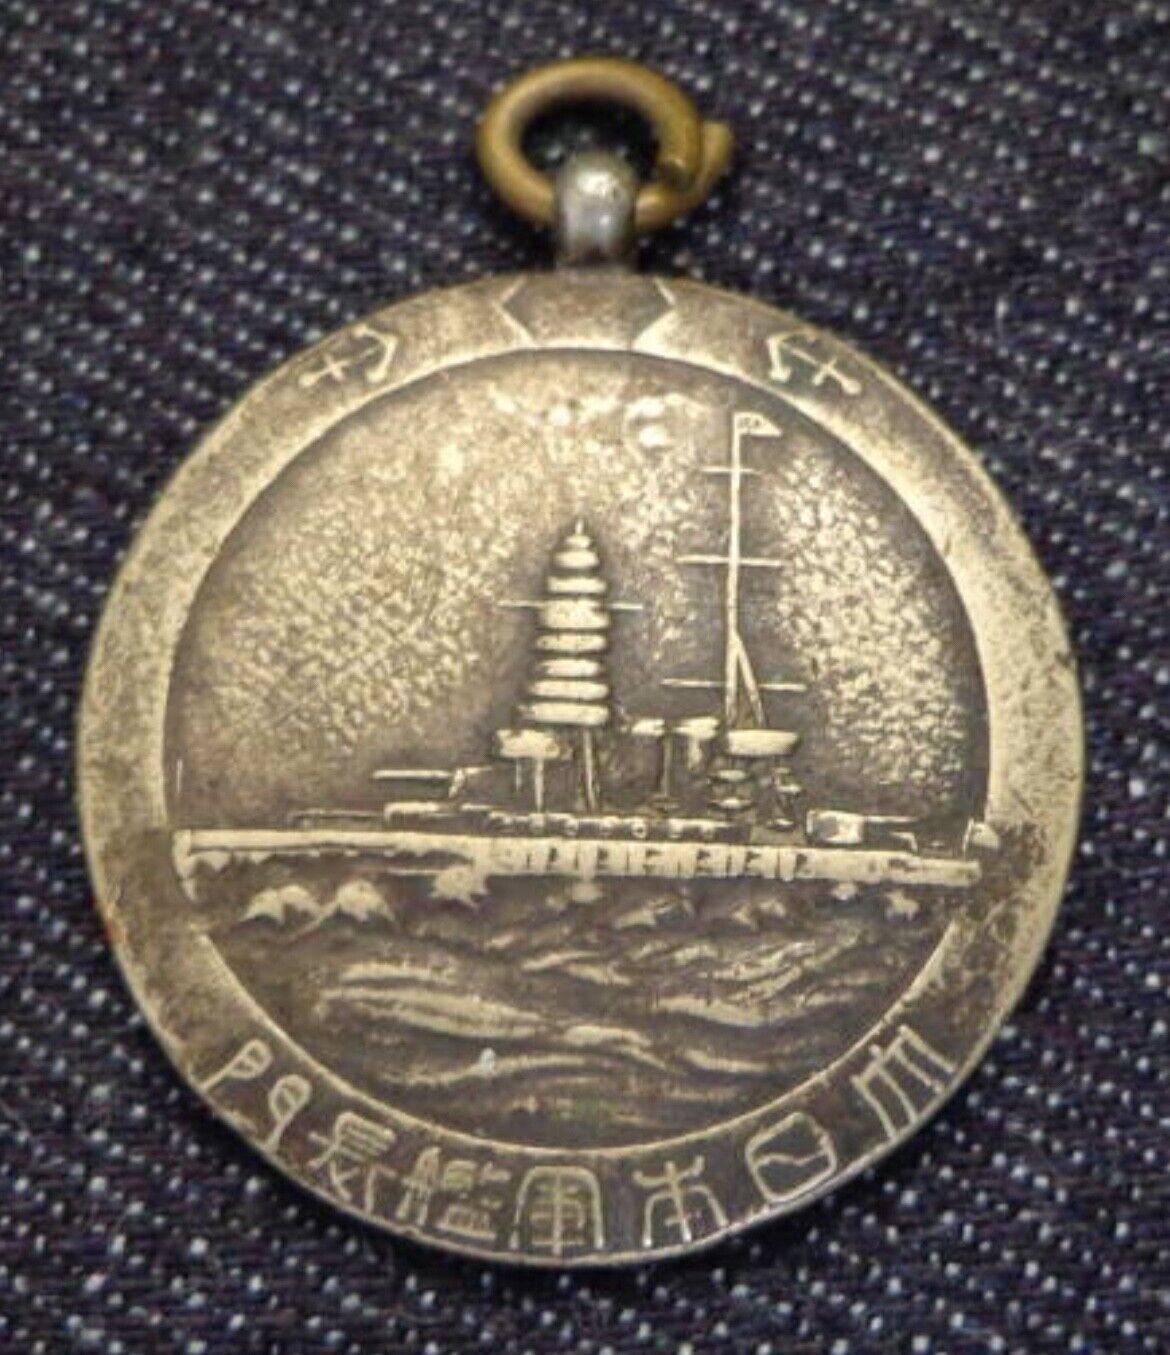 Antique Imperial Japanese Navy Nagato Battleship Medal - “Order Amidst Peace”